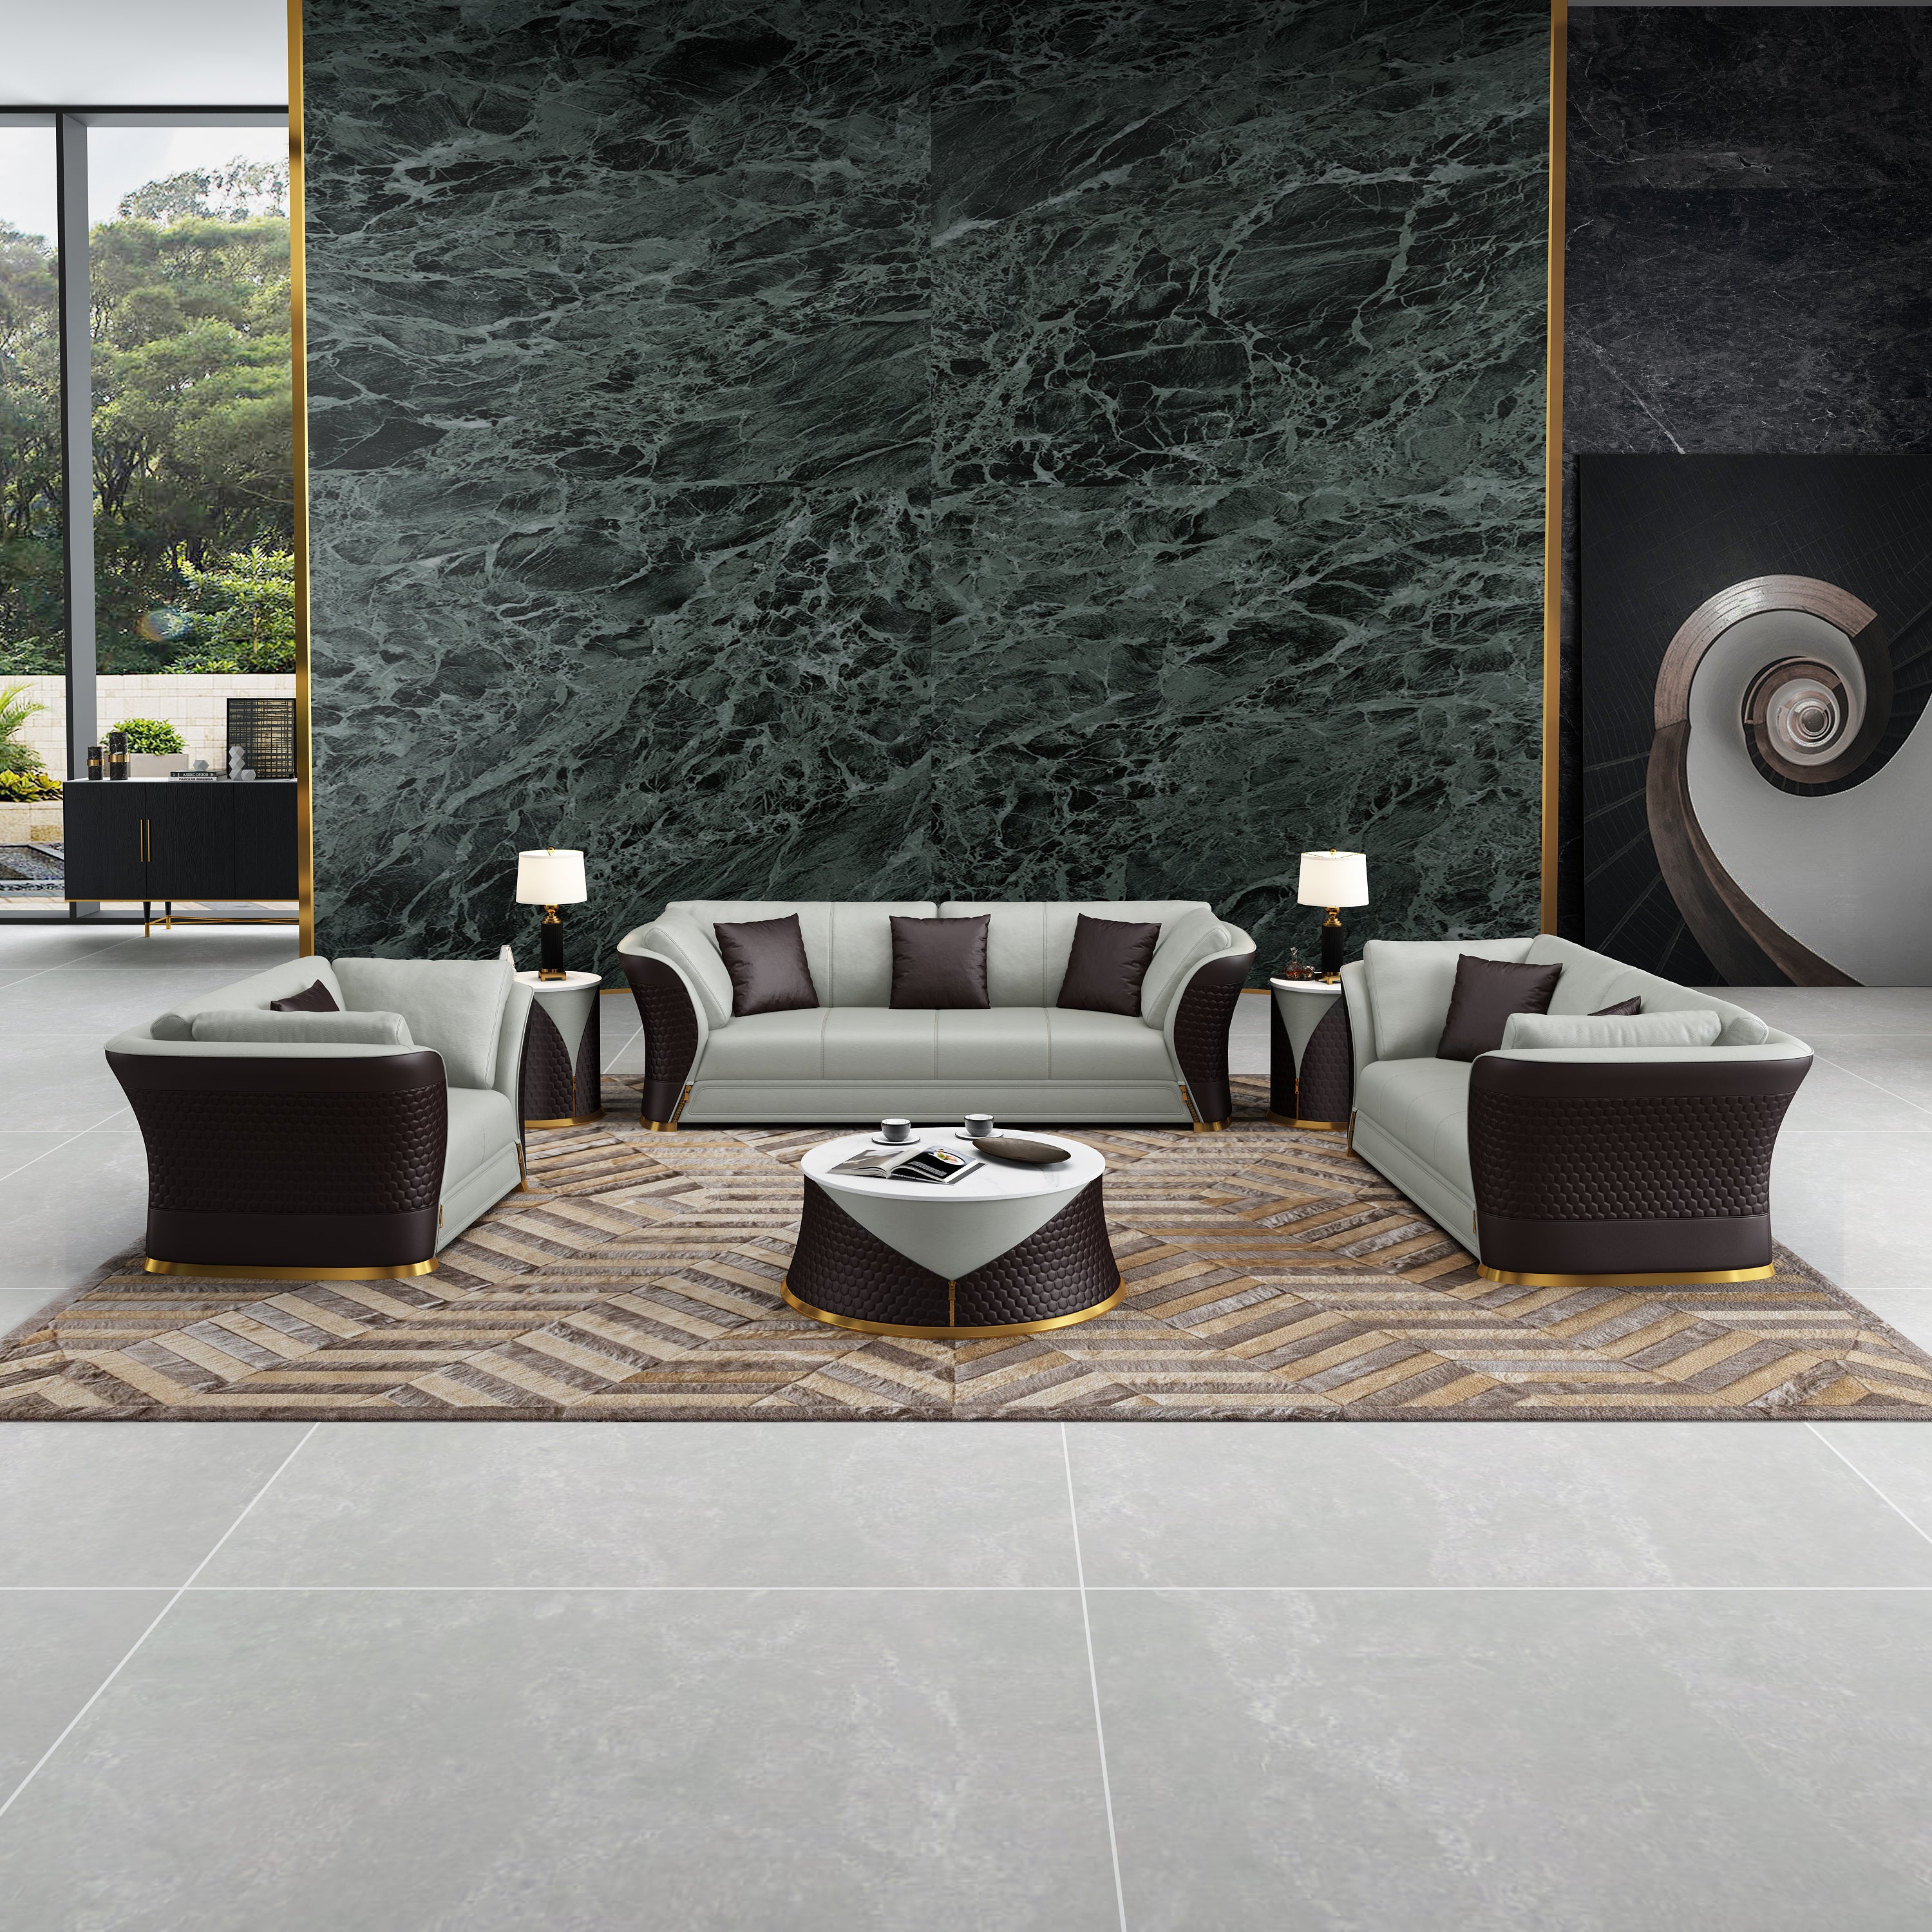 European Furniture - Vogue Side Table Grey & Chocolate - EF-27993-ET - New Star Living